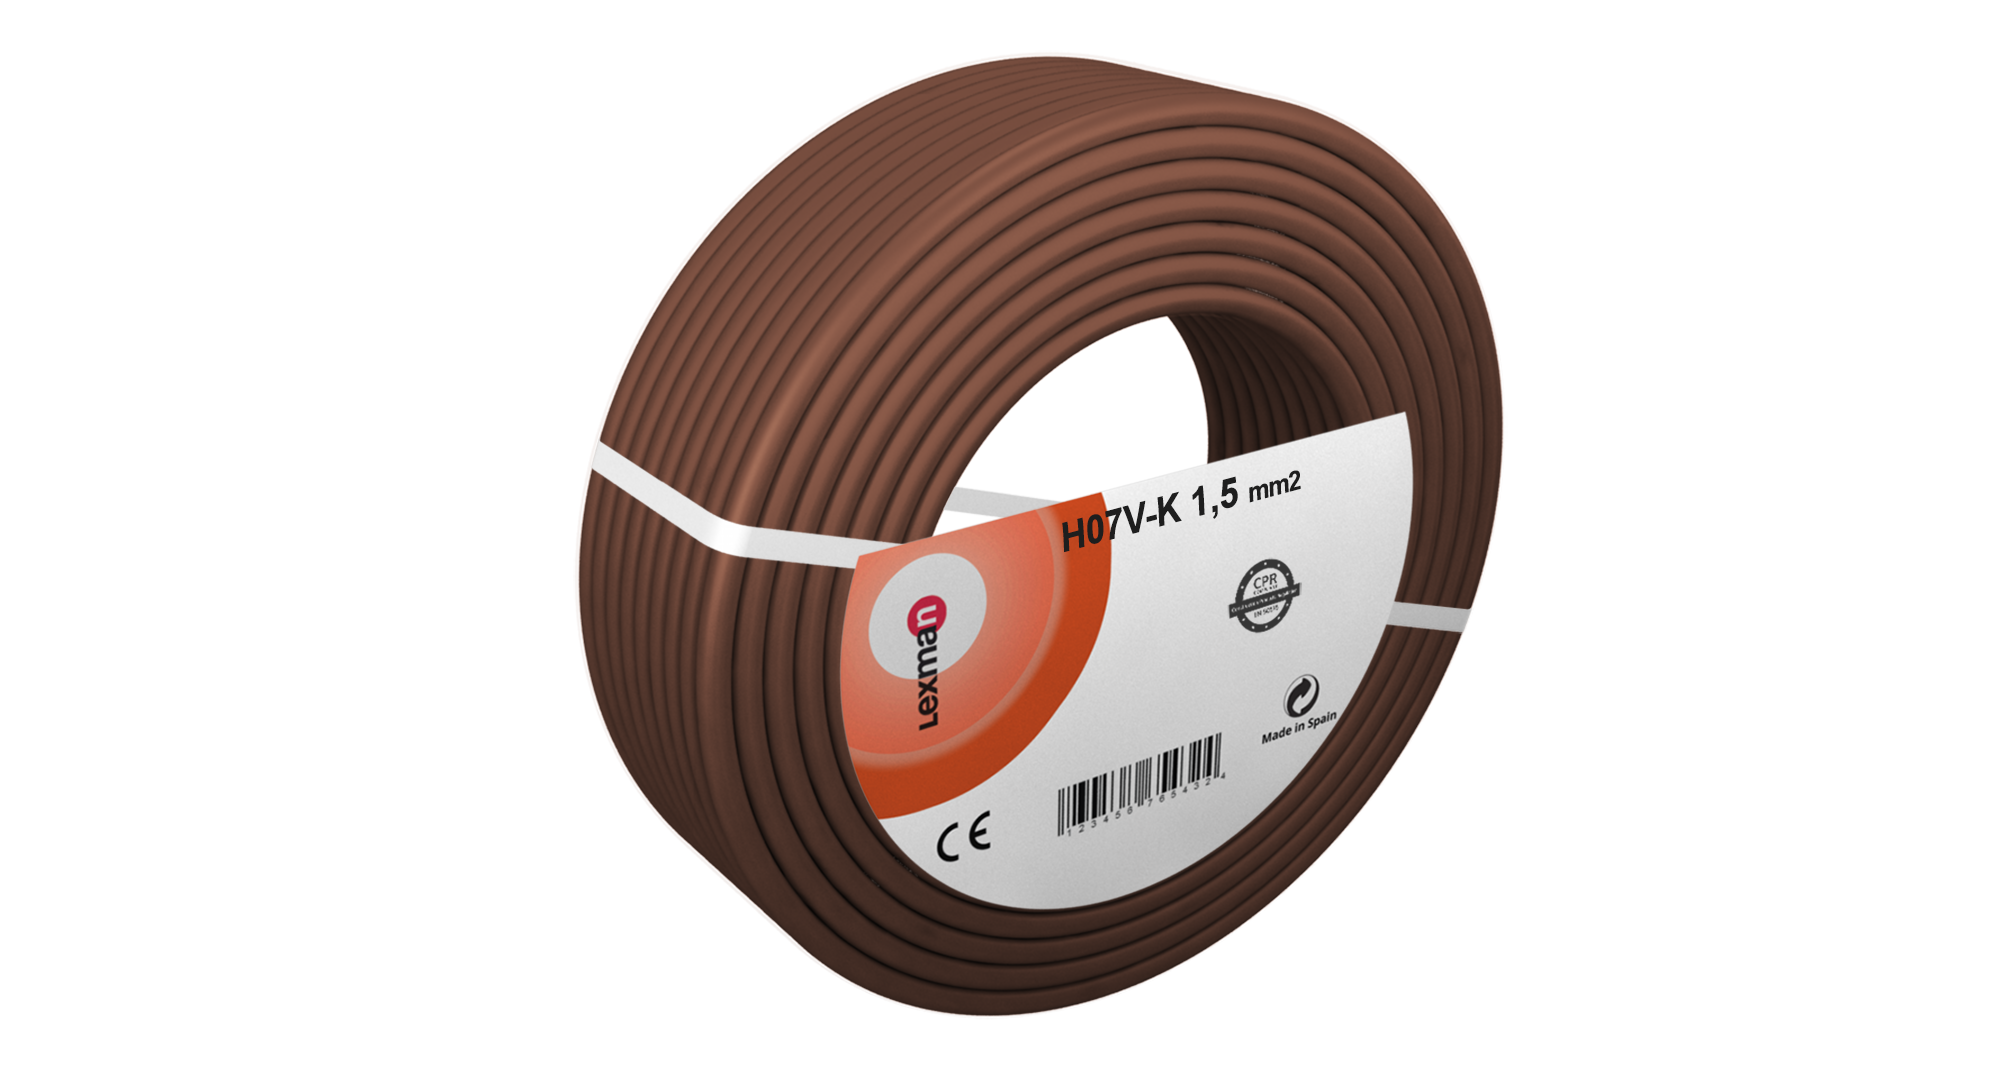 Cable eléctrico top cable h07v-k marrón 1,5 mm² 200 m